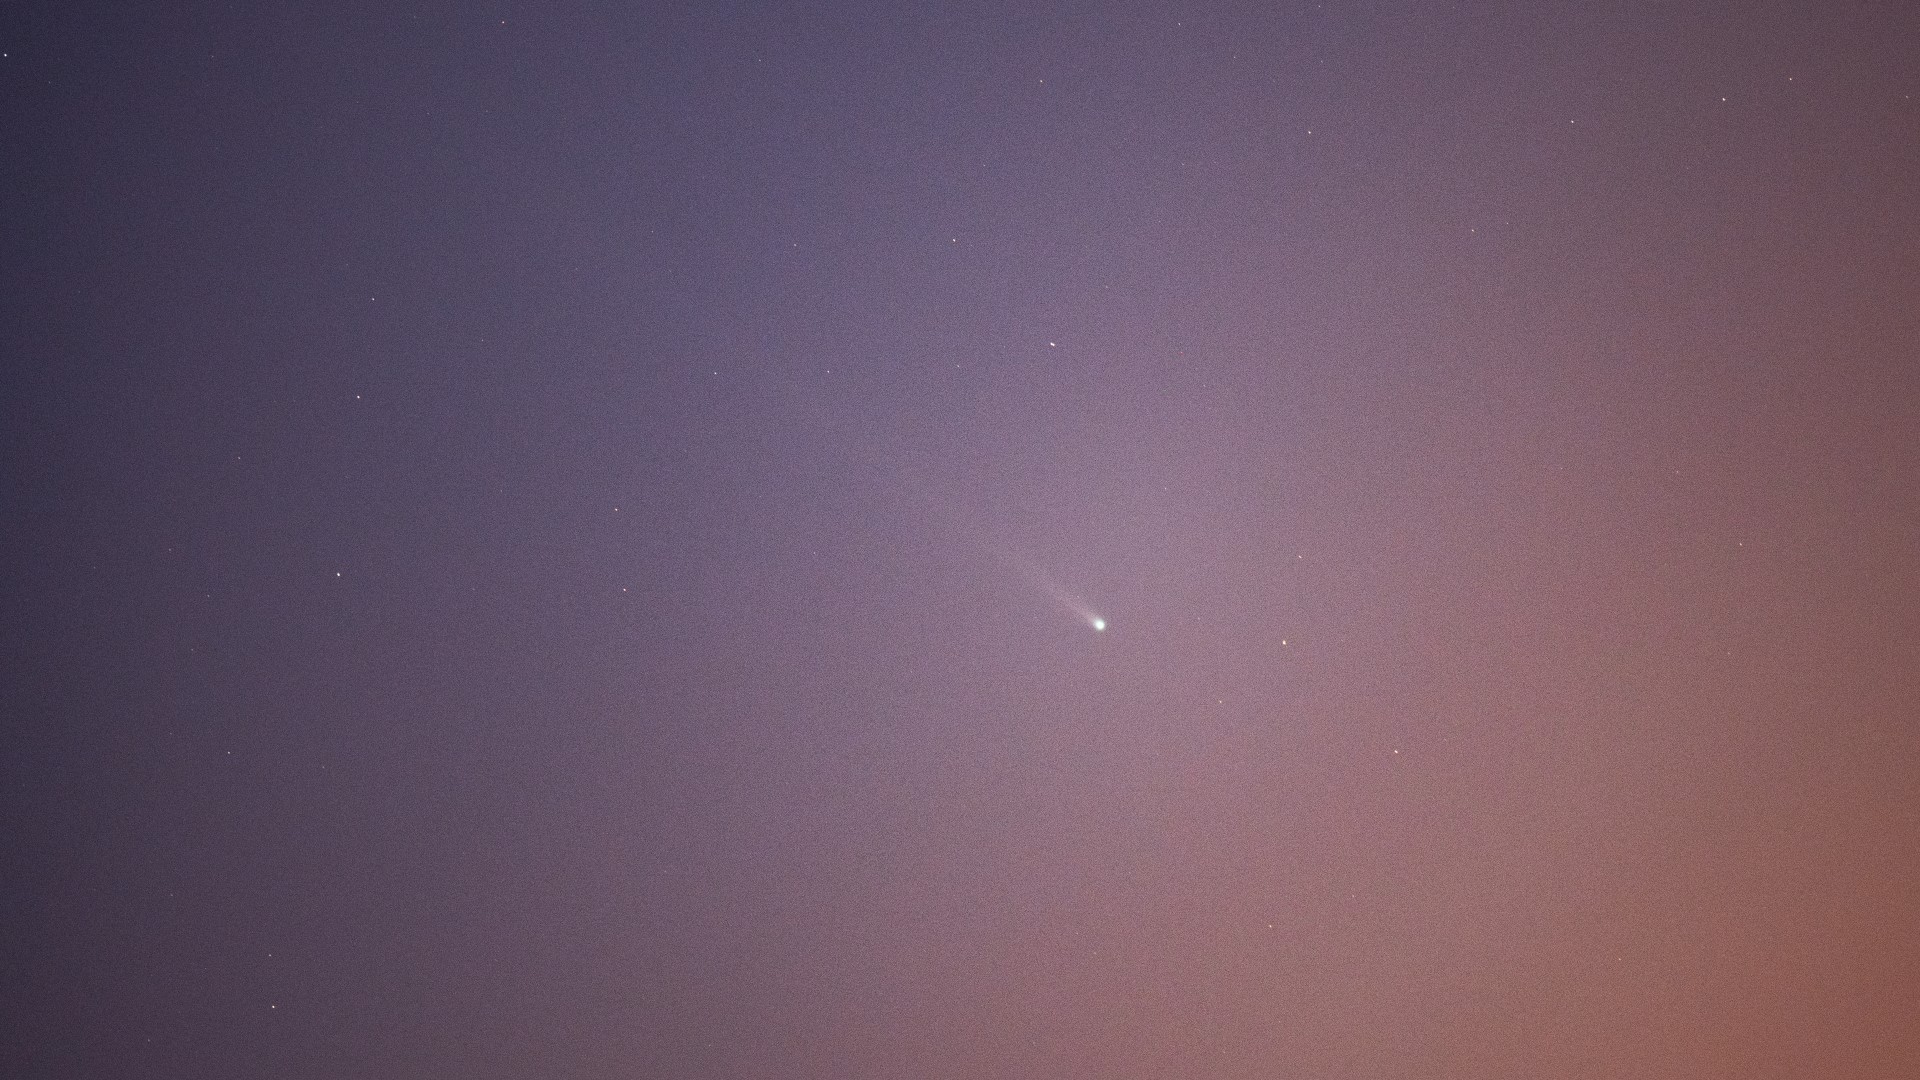 A comet in the twilight sky